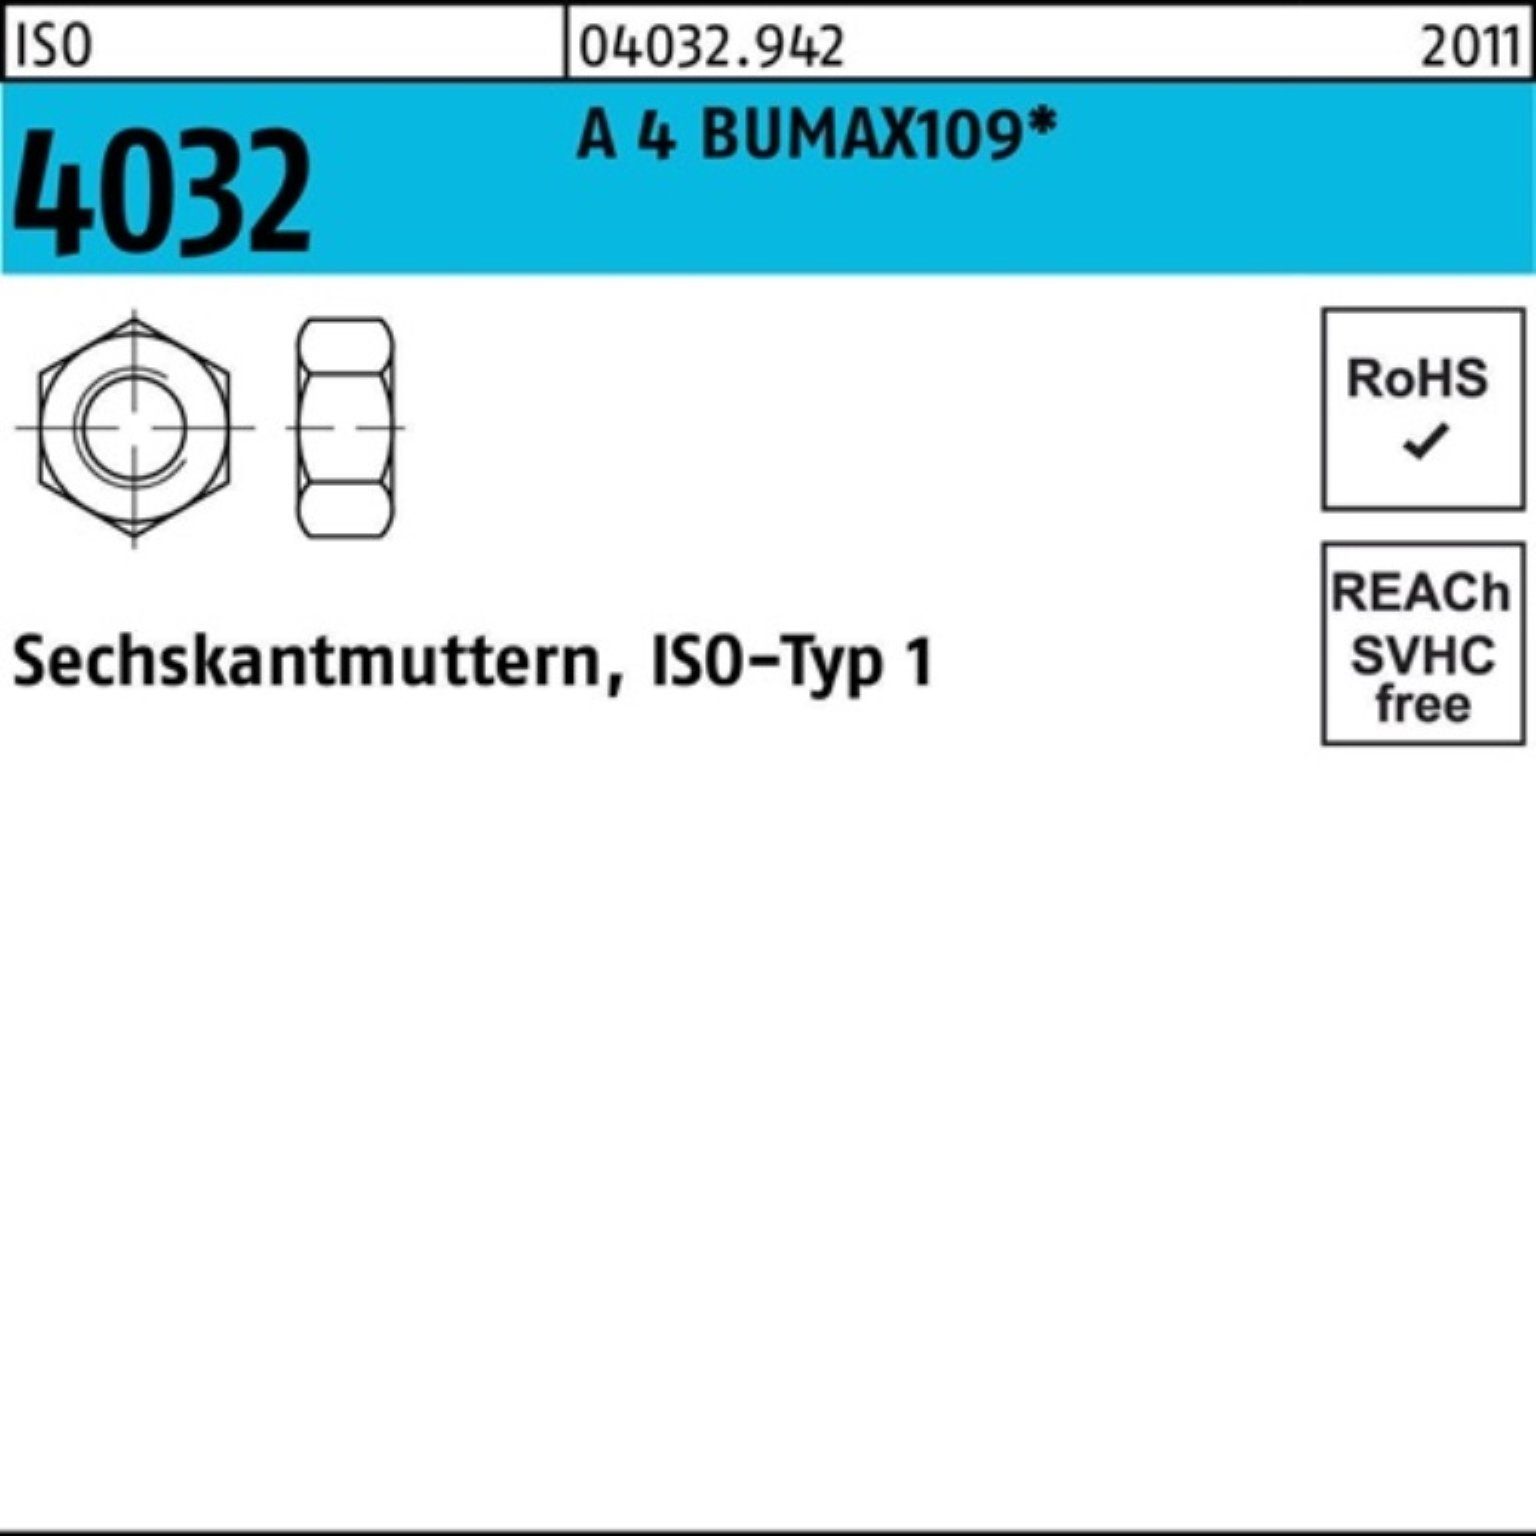 Bufab Muttern 100er Pack Sechskantmutter I Stück BUFAB 4 A BUMAX109 4032 ISO 50 M12